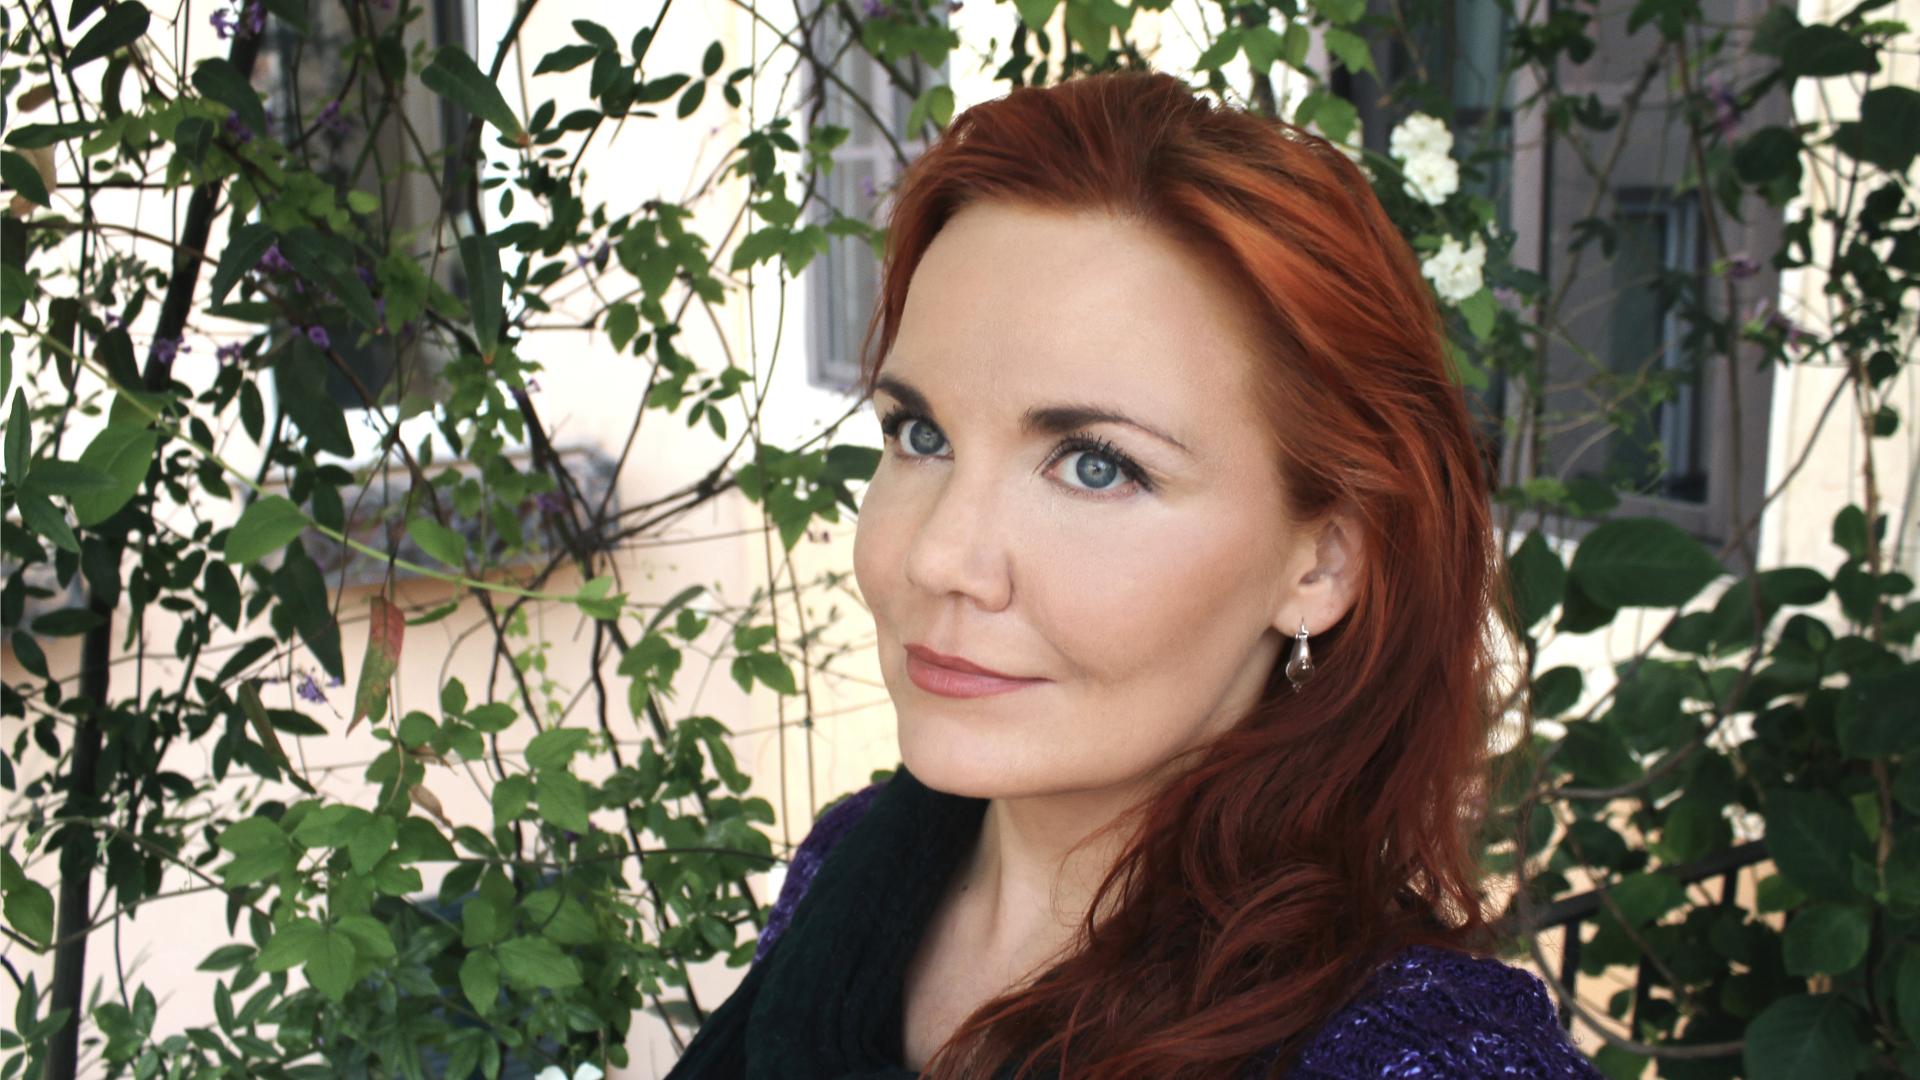 Poeta y escritora finlandesa Katariina Vuorinen